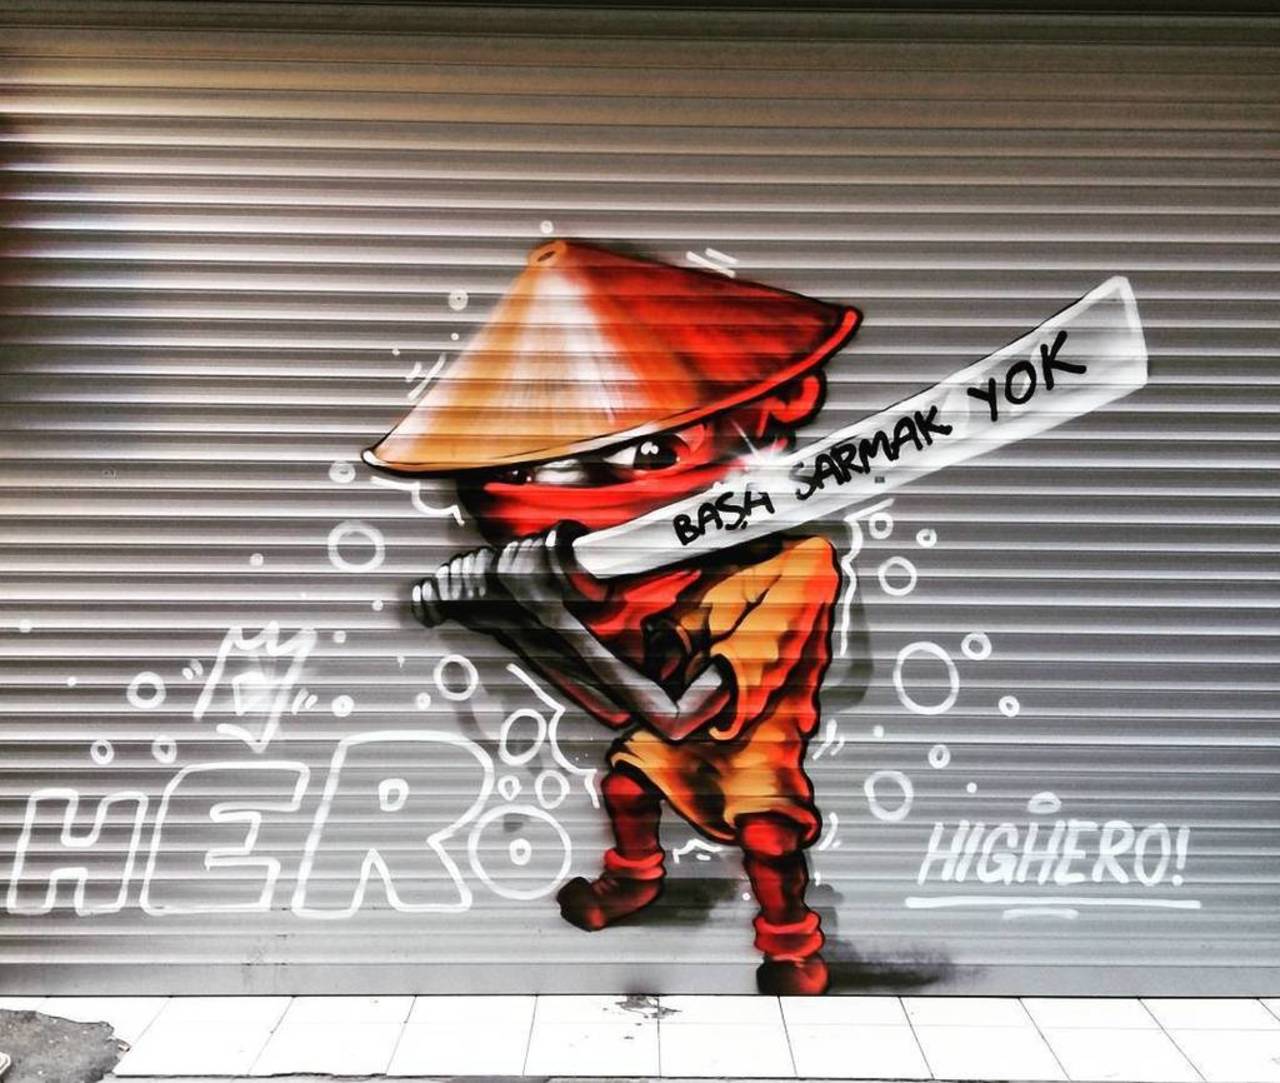 RT @StArtEverywhere: By @highero @dsb_graff #dsb_graff @rsa_graffiti @streetawesome #streetart #urbanart #graffitiart #graffiti #streeta… https://t.co/whWLNs2apE